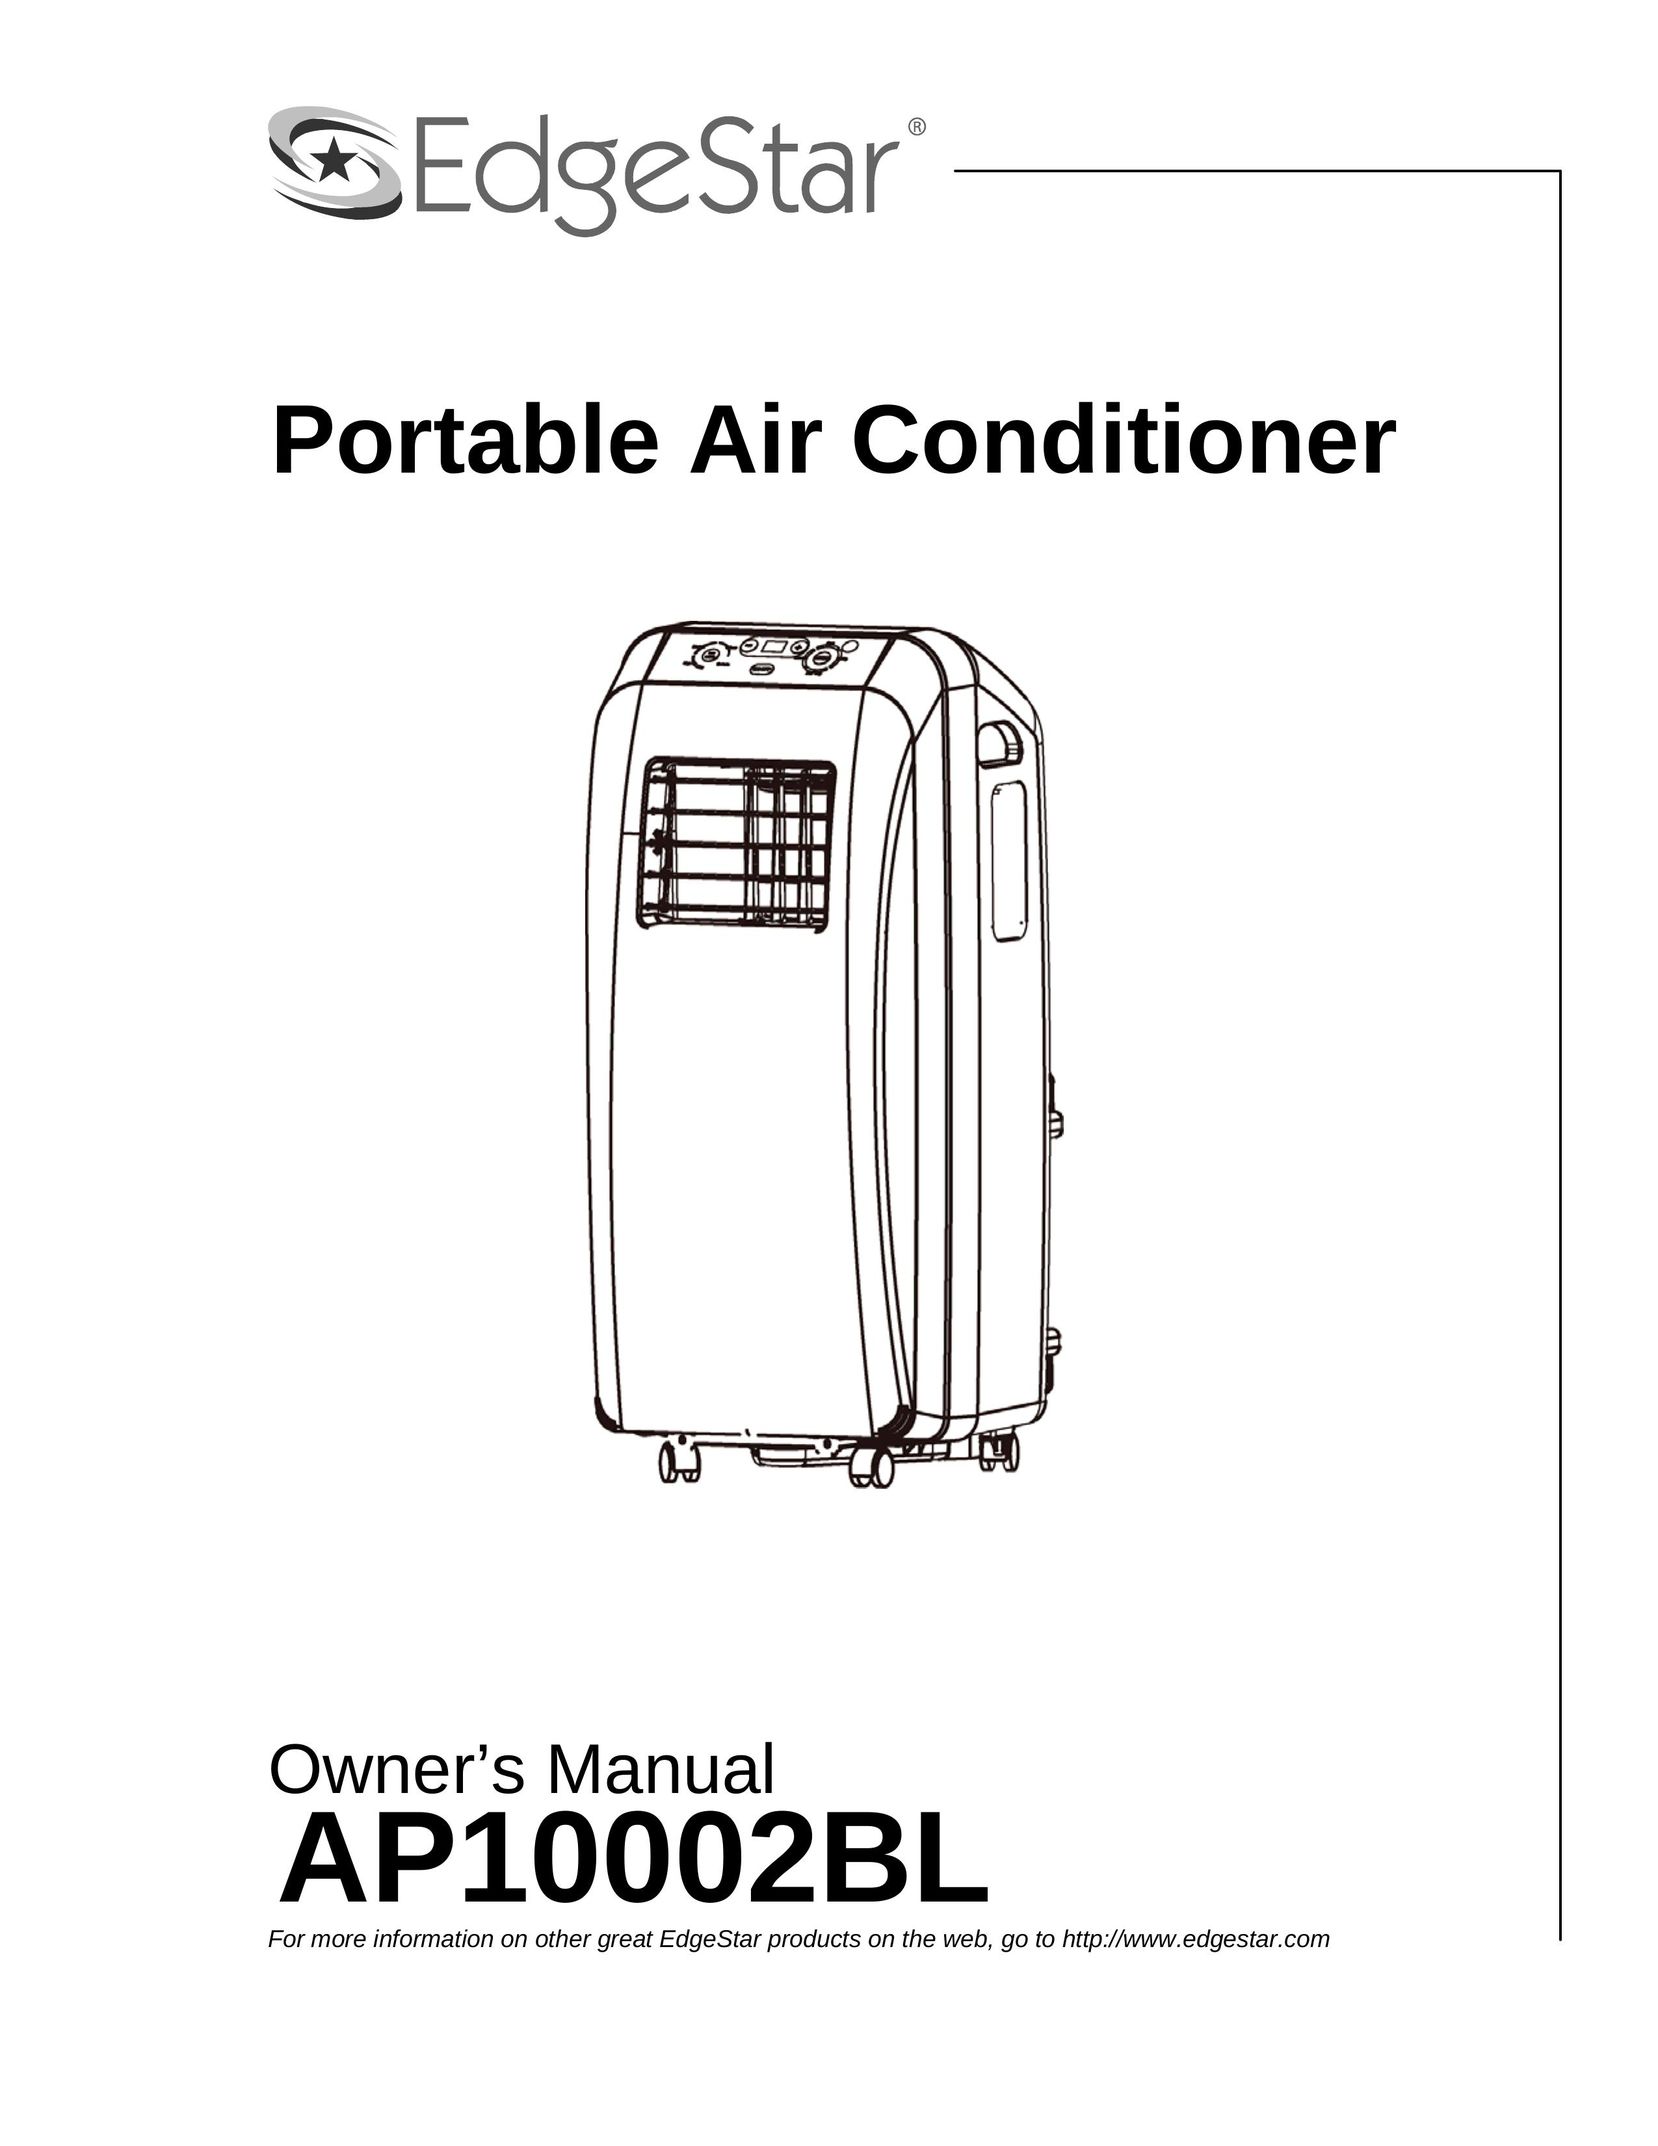 EdgeStar AP10002BL Air Conditioner User Manual